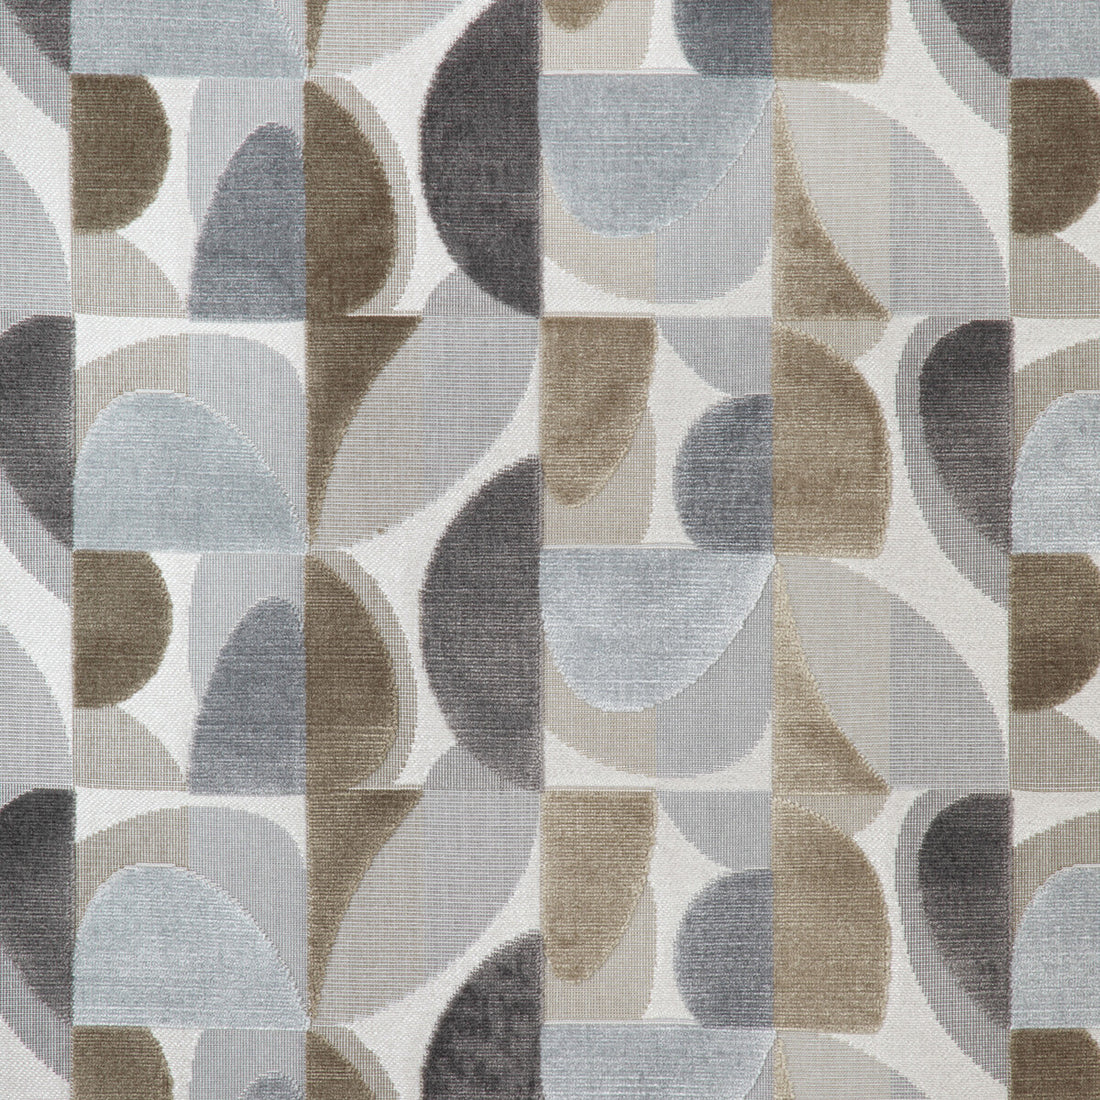 Kravet Design fabric in 36903-52 color - pattern 36903.52.0 - by Kravet Design in the Modern Velvets collection